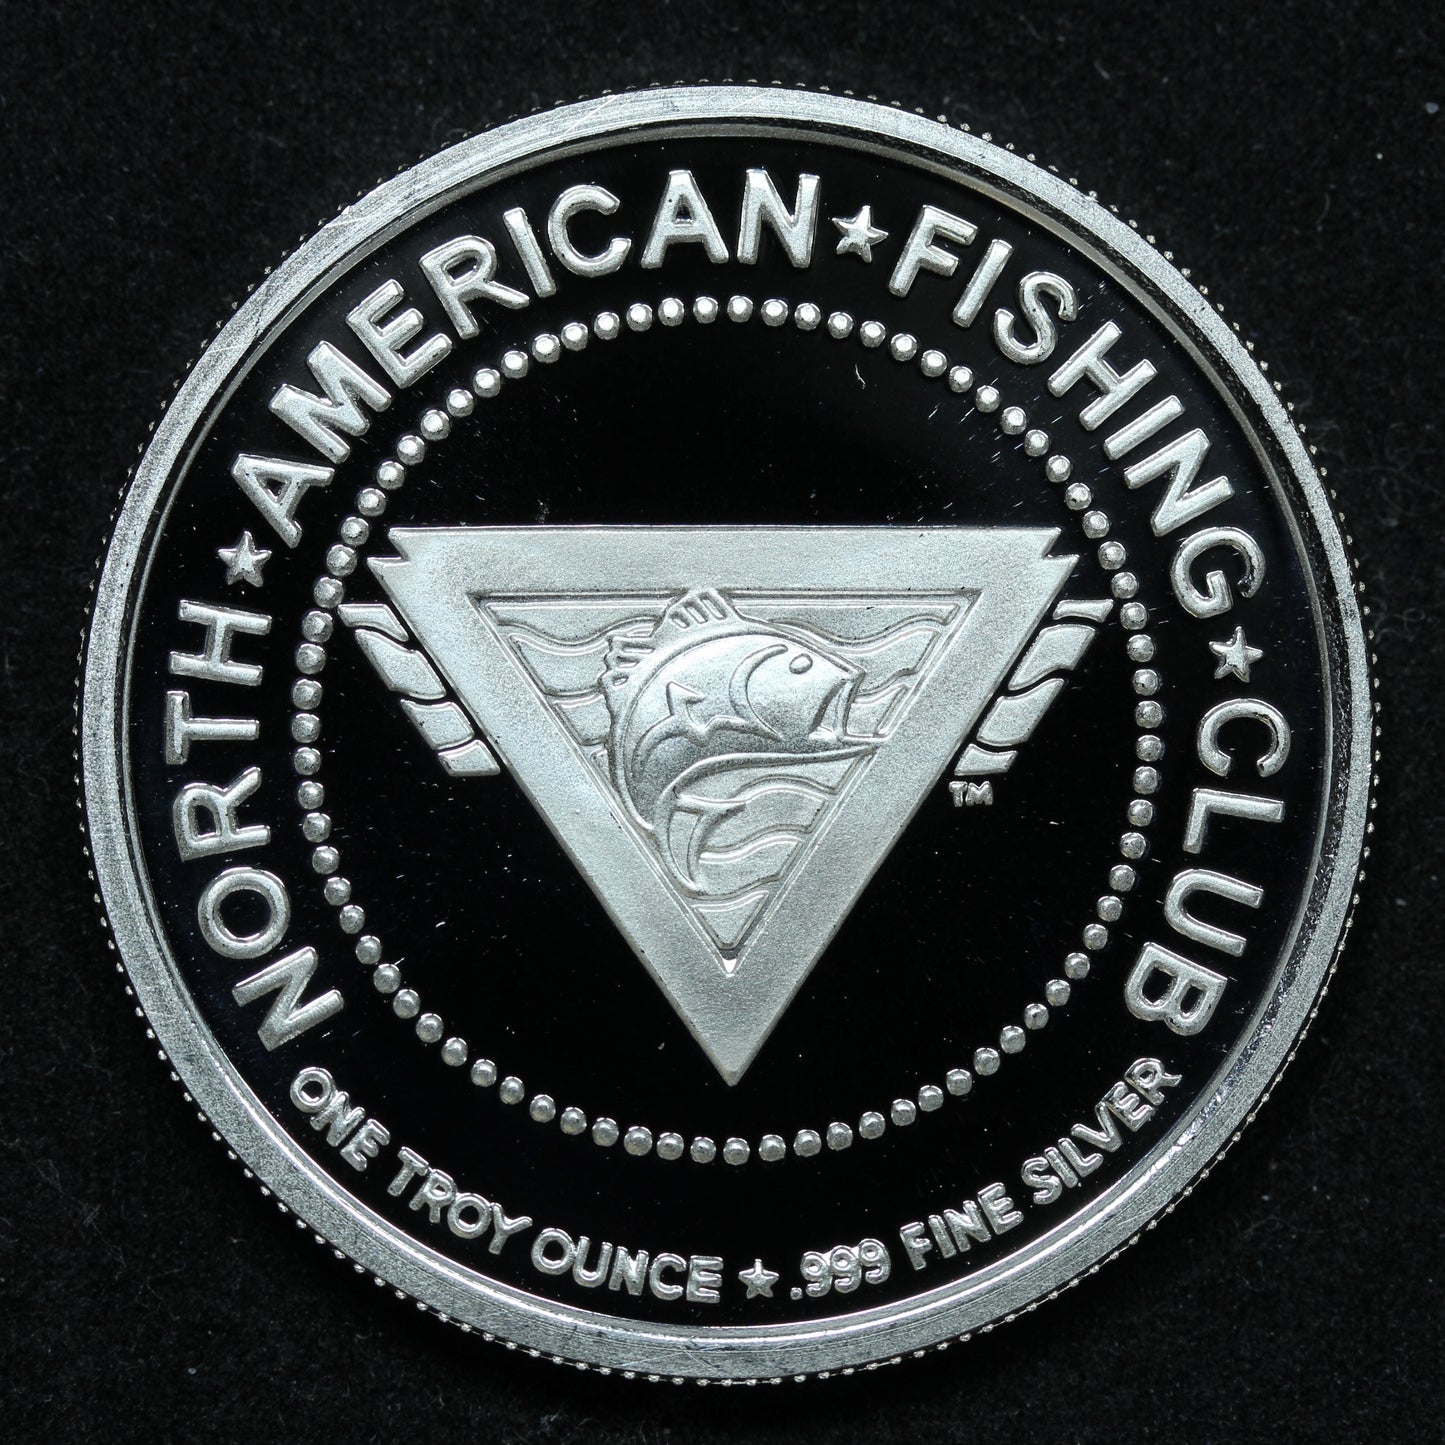 1 oz .999 Fine Silver - National Fishing Grand Slam - Channel Catfish w/ Capsule